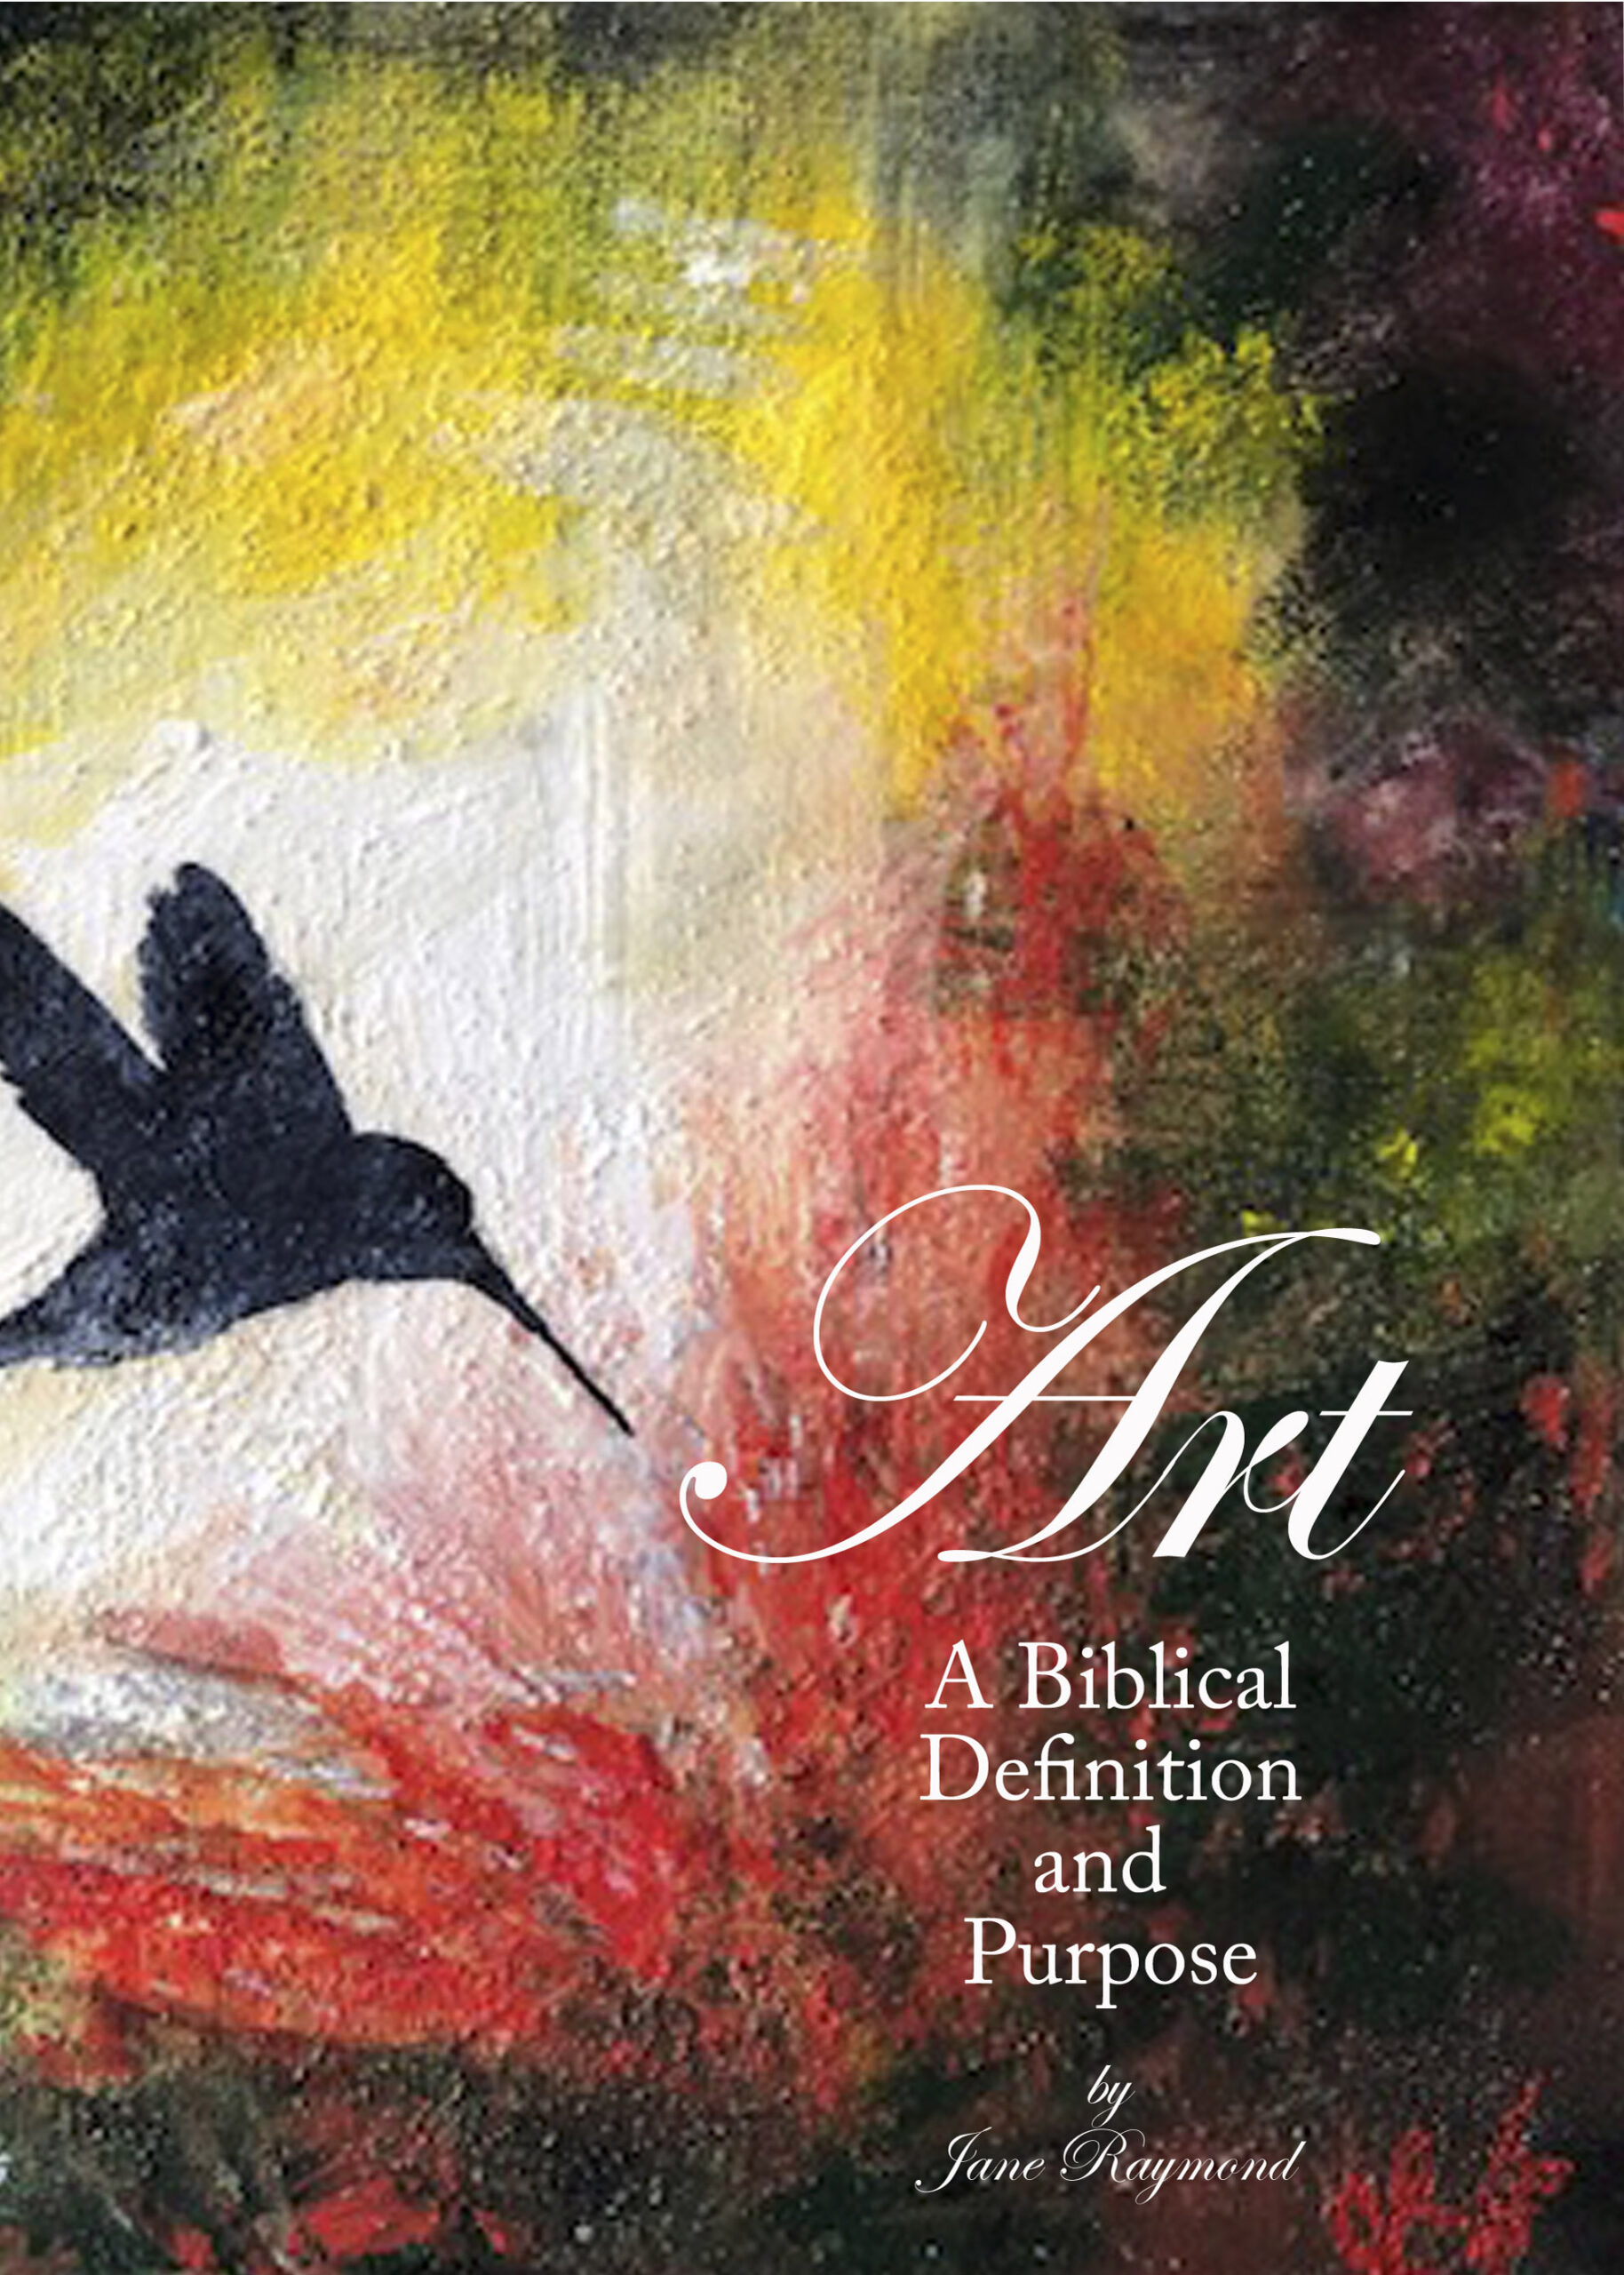 Art: A Biblical Definition and Purpose, by Jane Raymond